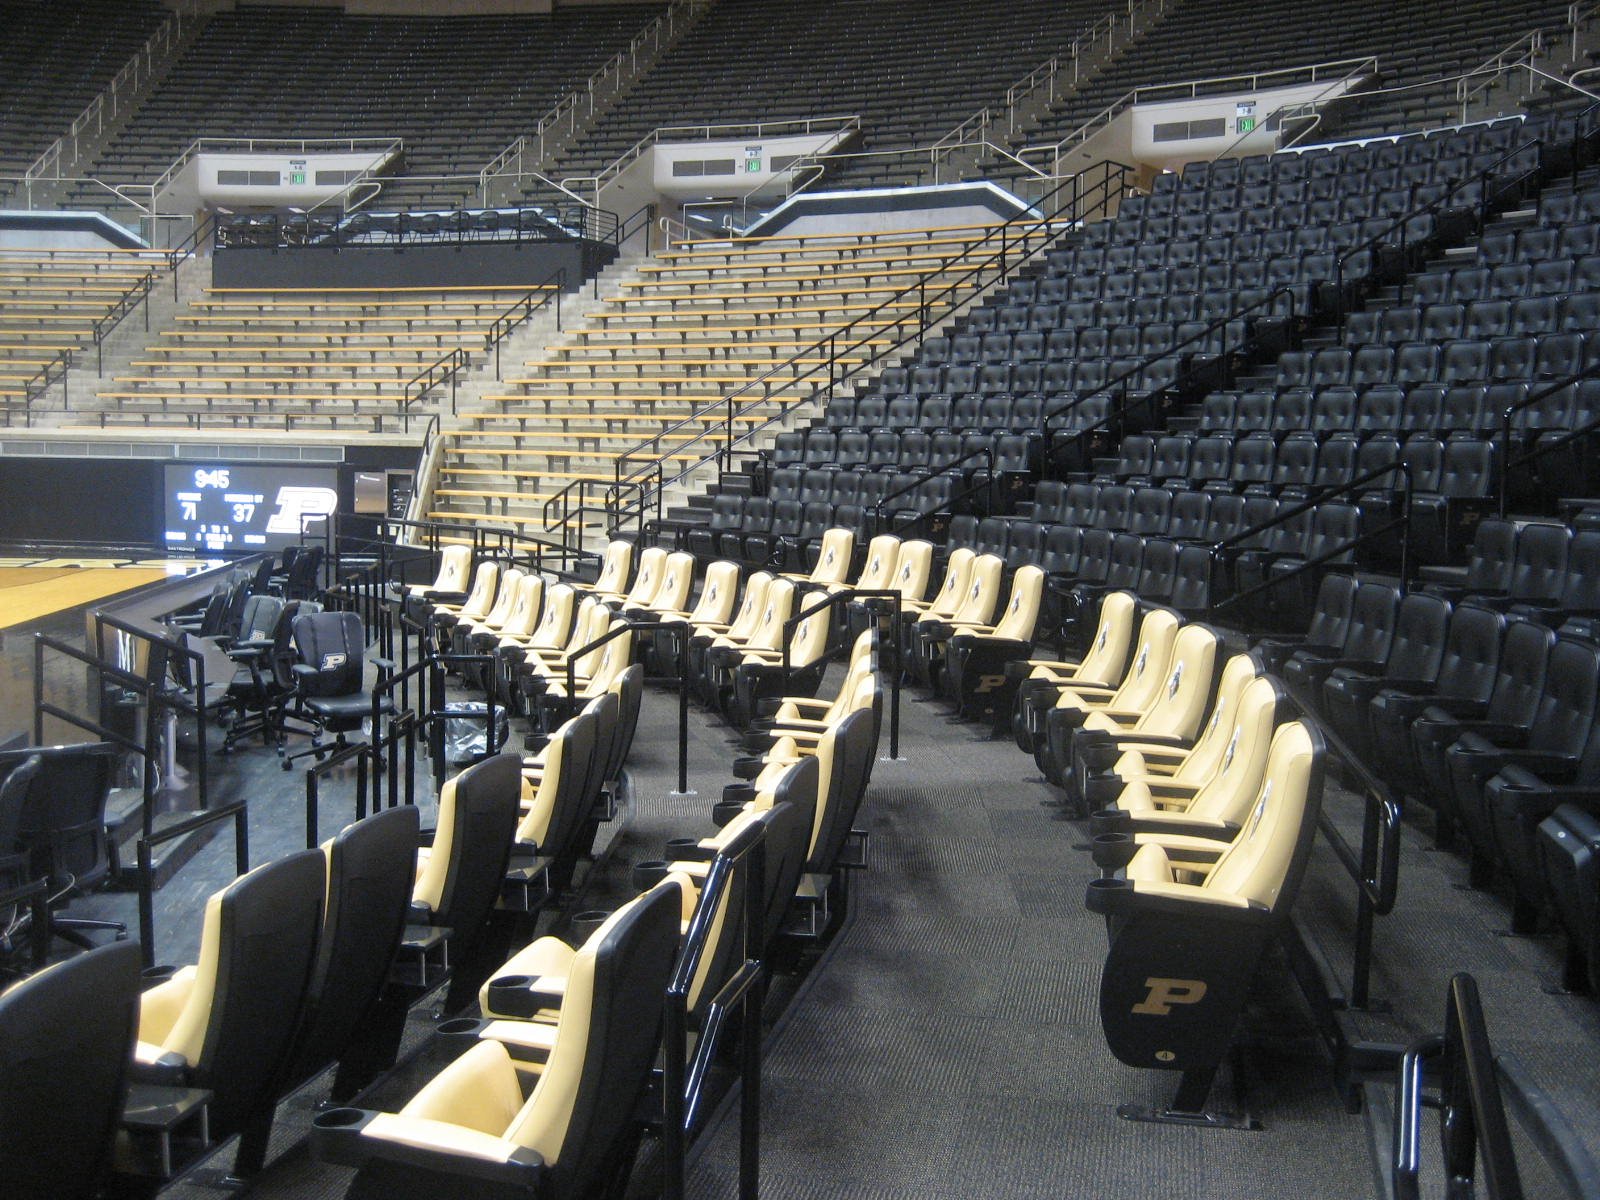 Courtside seats mackey arena